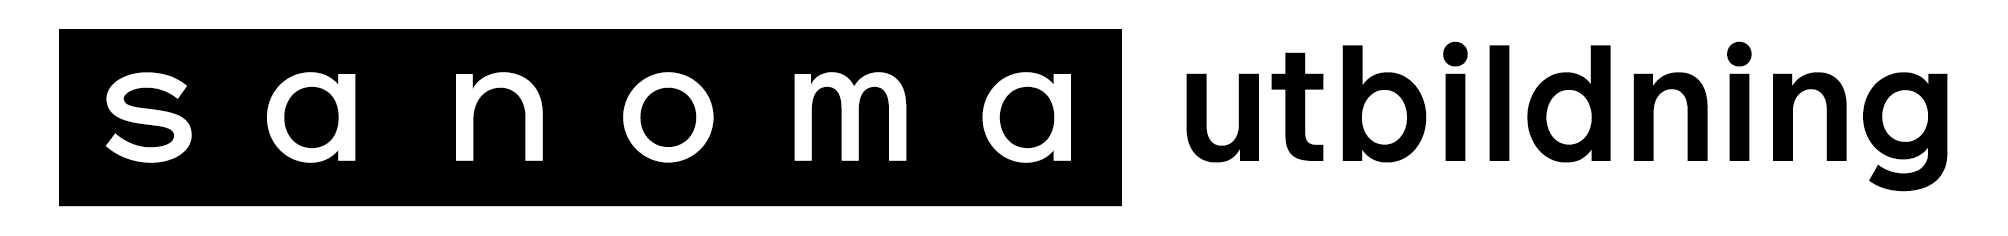 sanoma logo